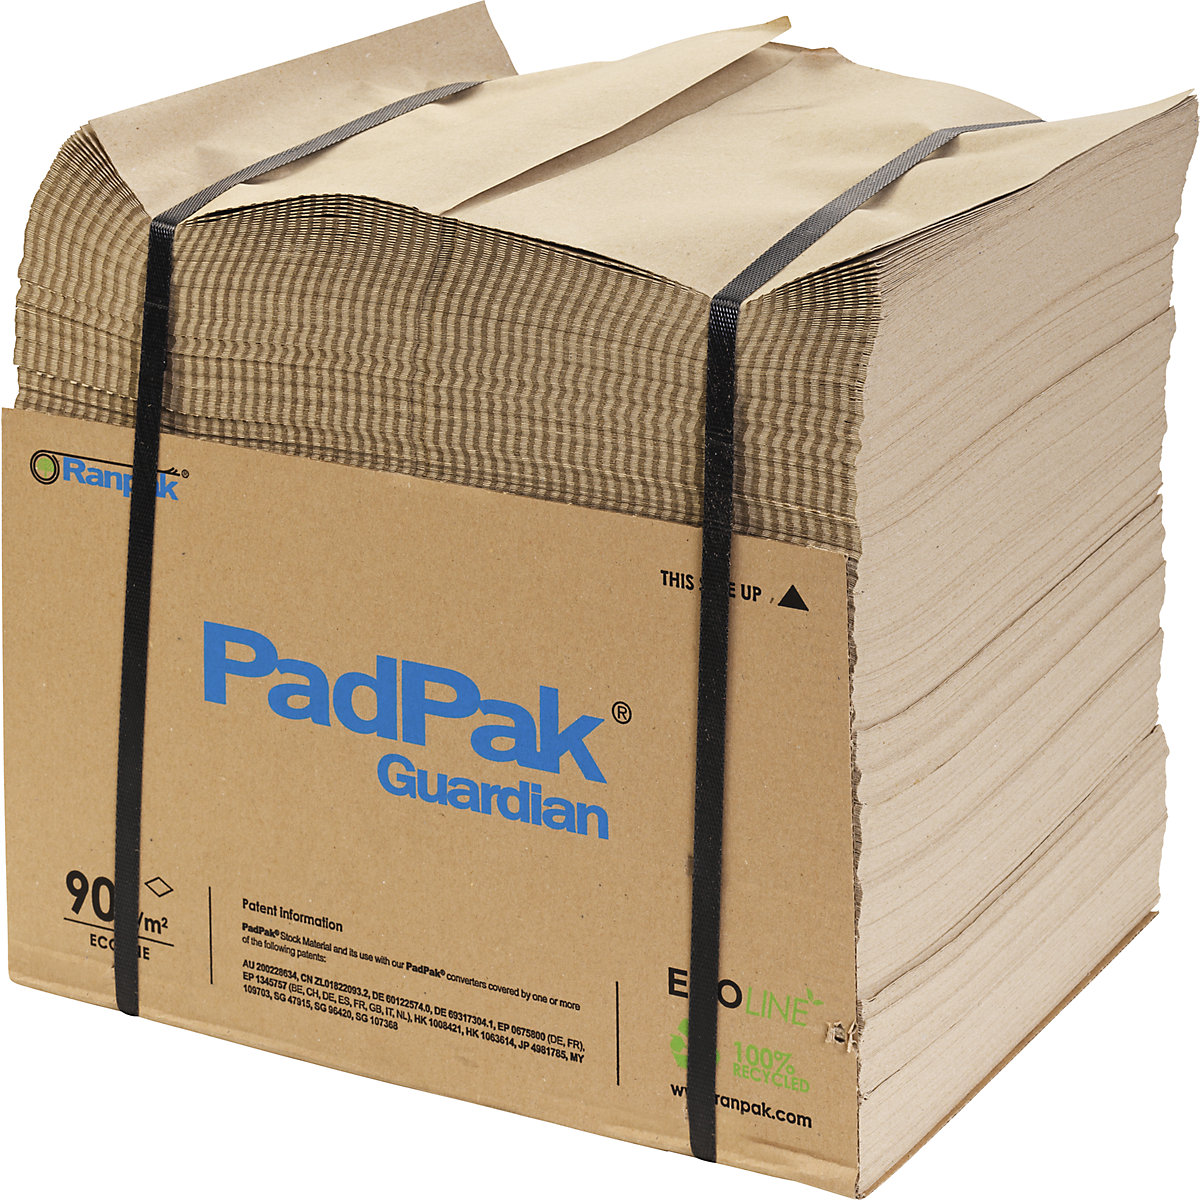 PadPak Guardian Papier, recycelt terra, Breite 38 mm, braun, 1-lagig-1